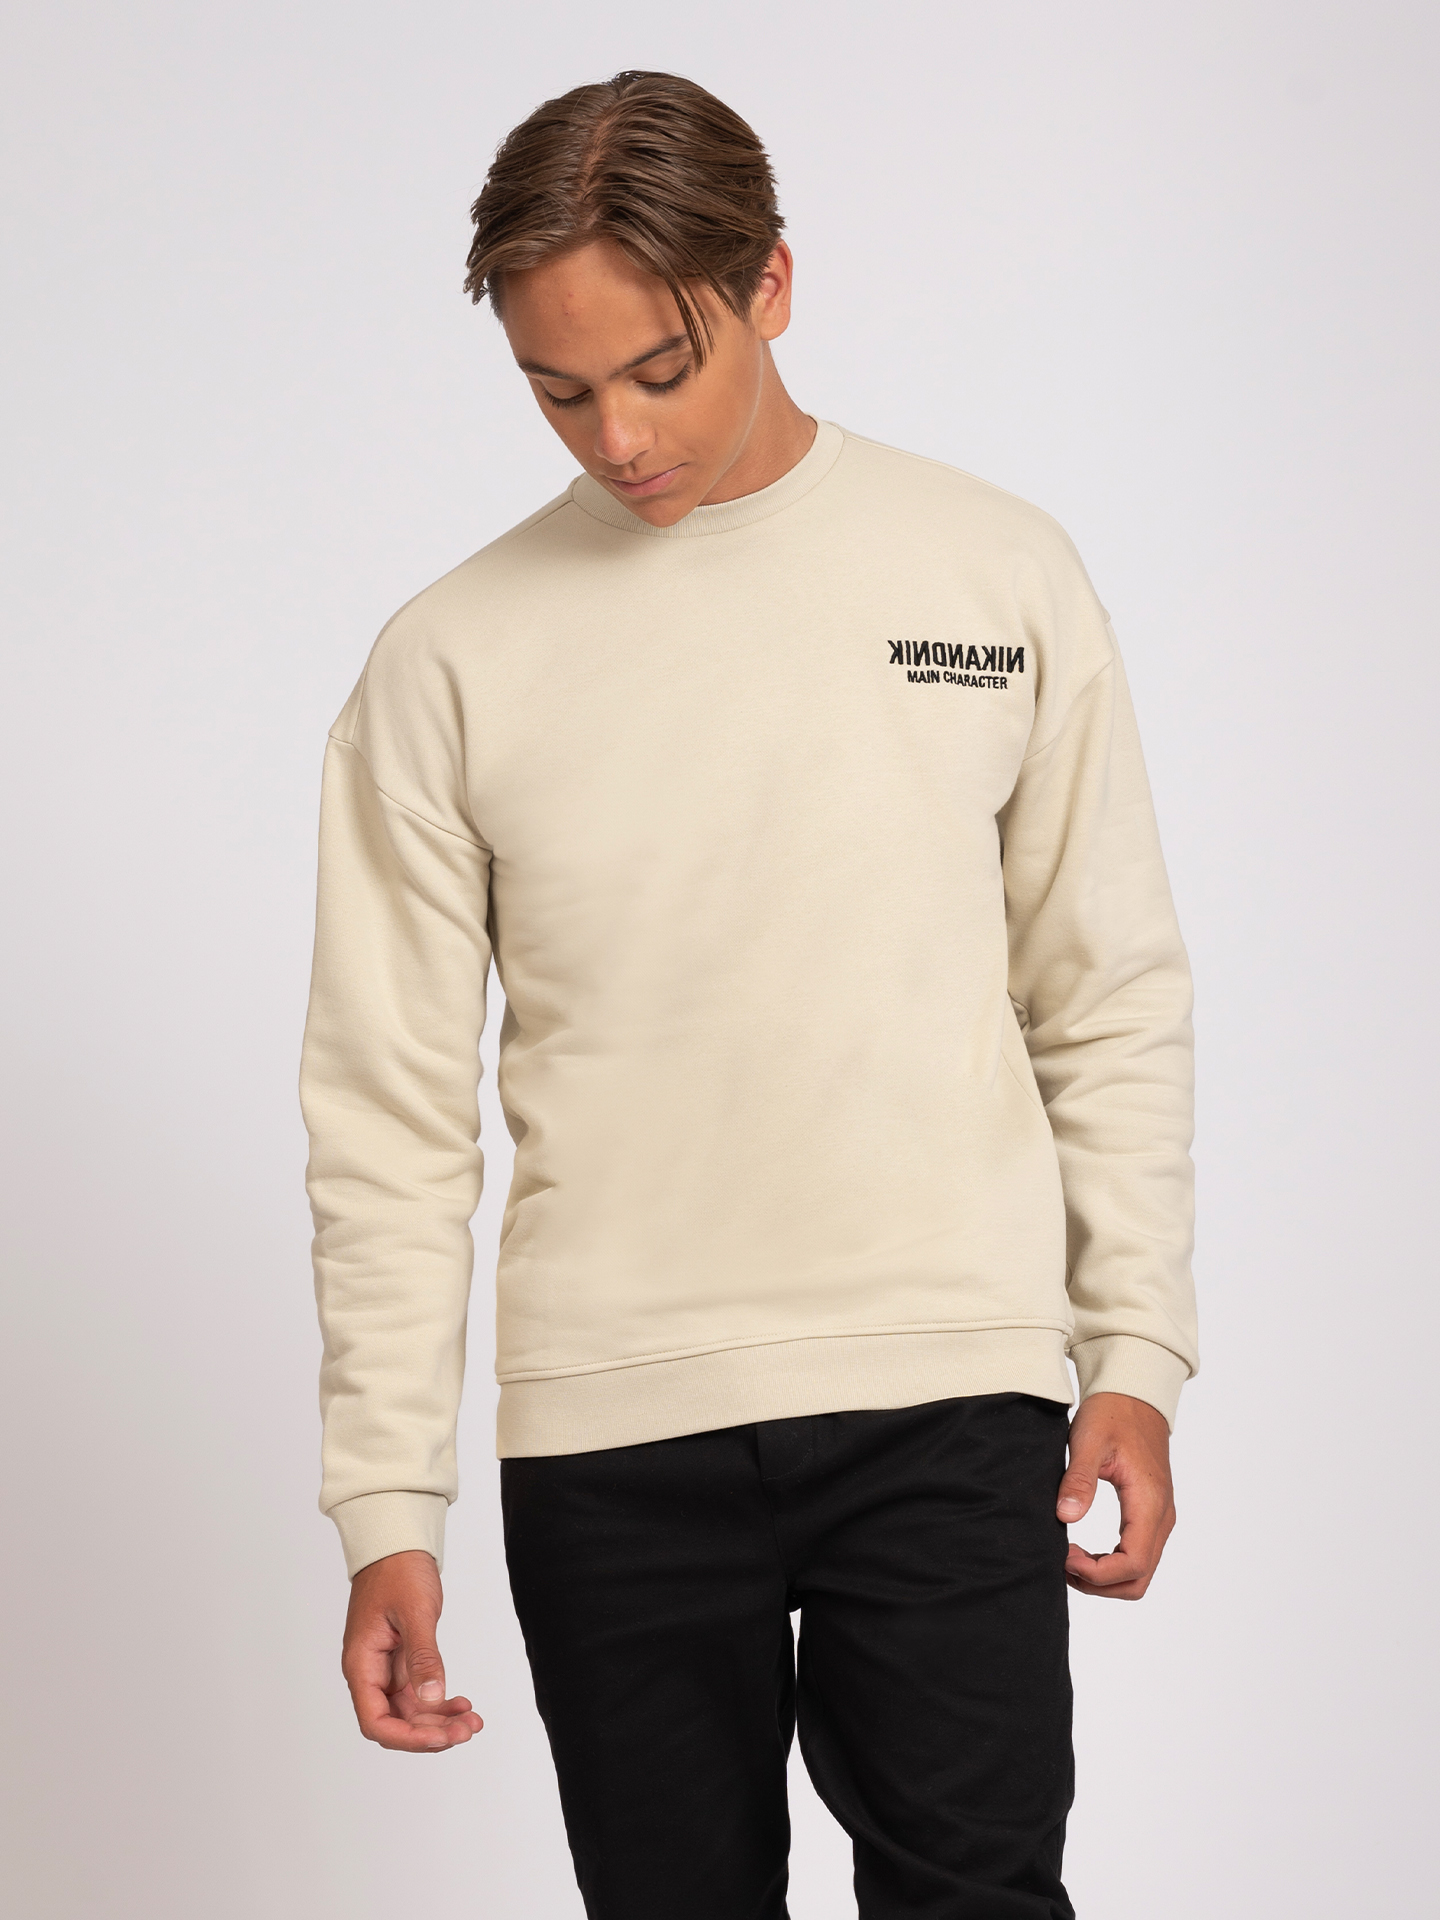 Mirror Sweatshirt